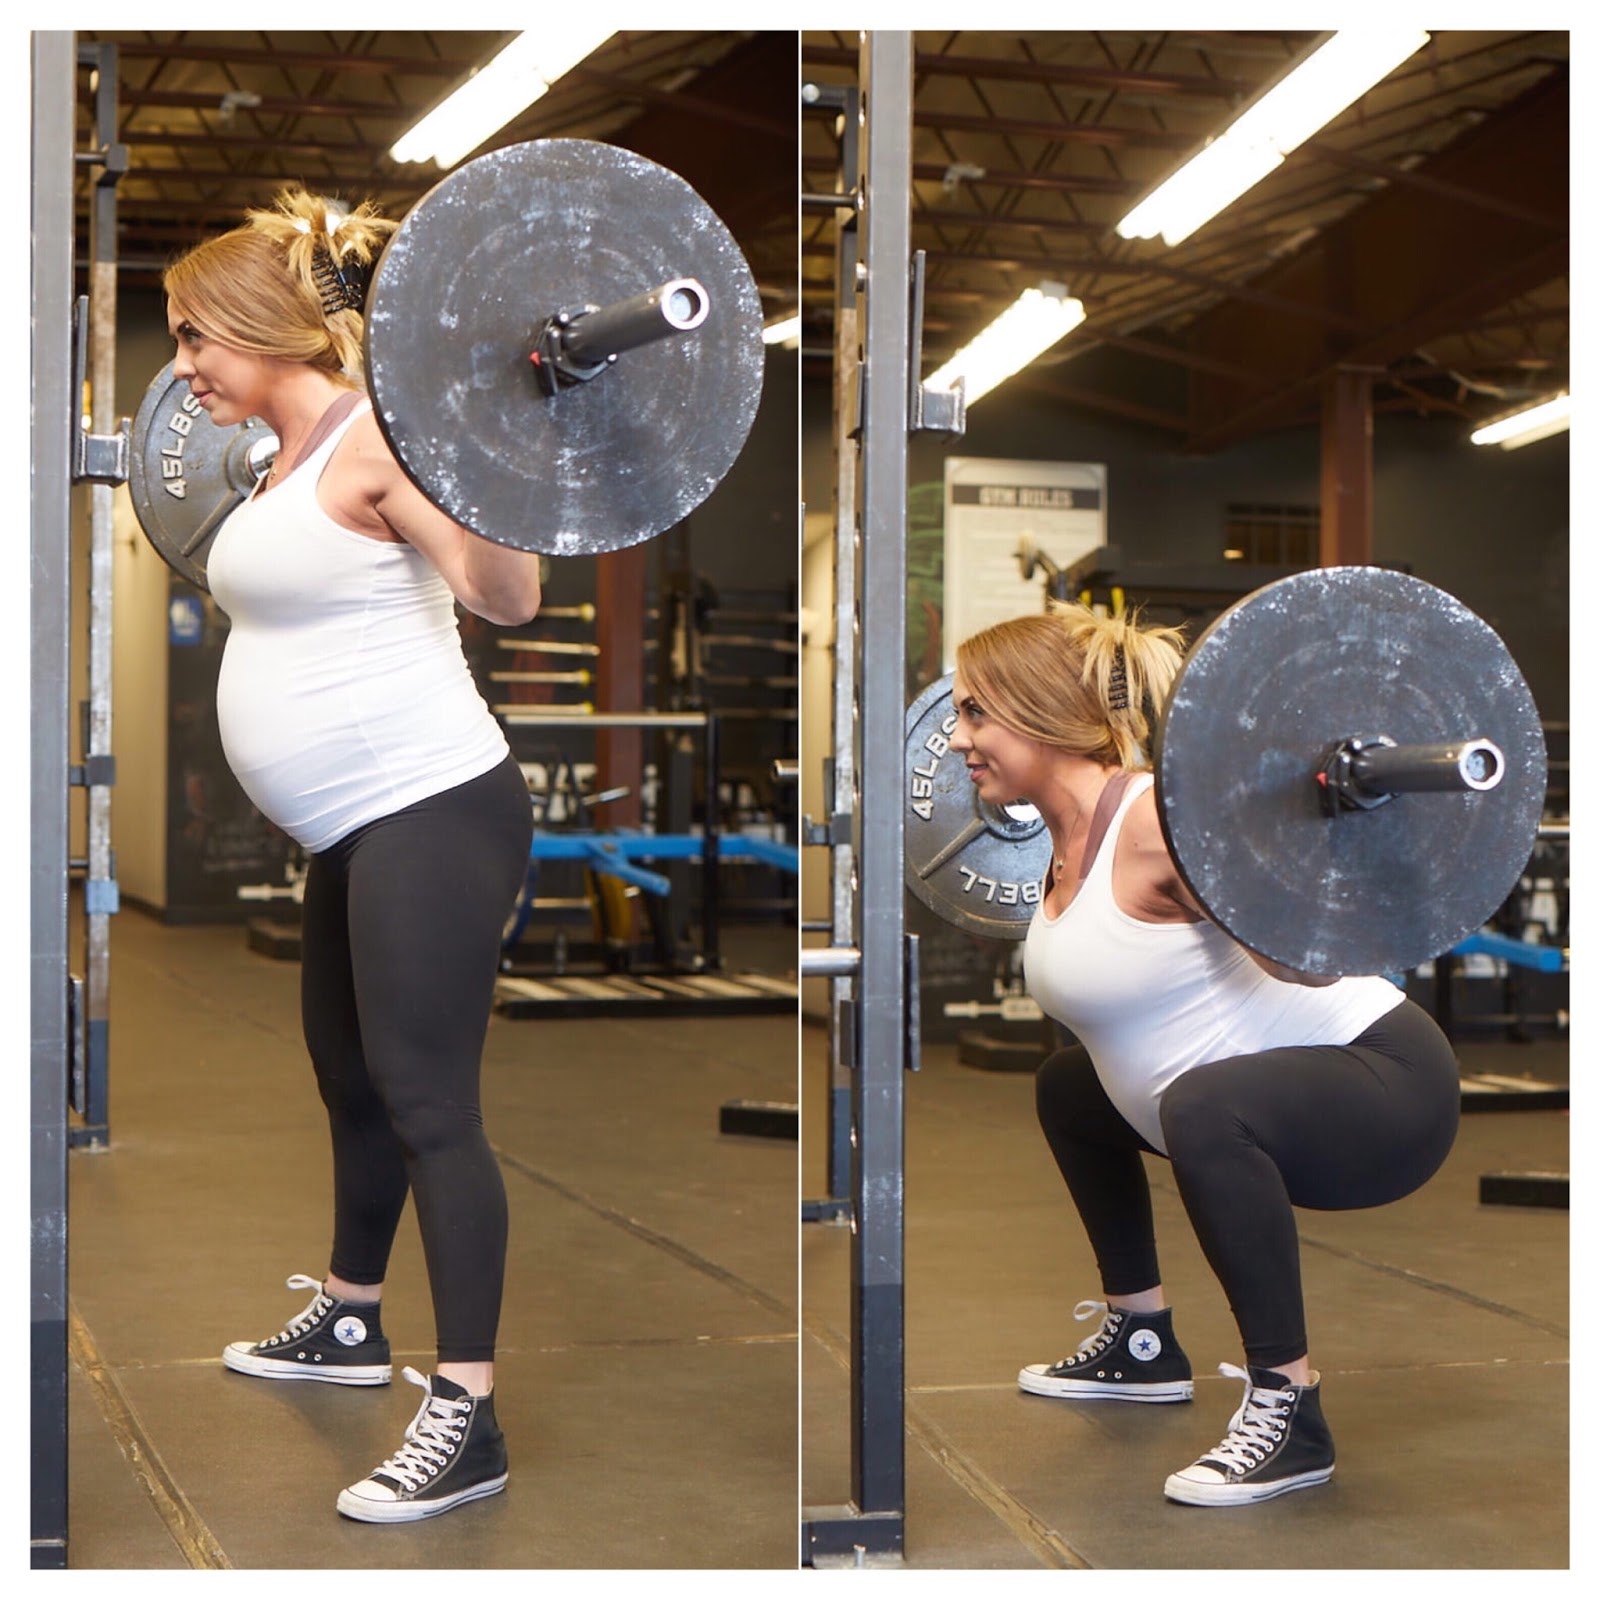 Safe pregnancy postpartum squat workout - BodyFabulous Pregnancy